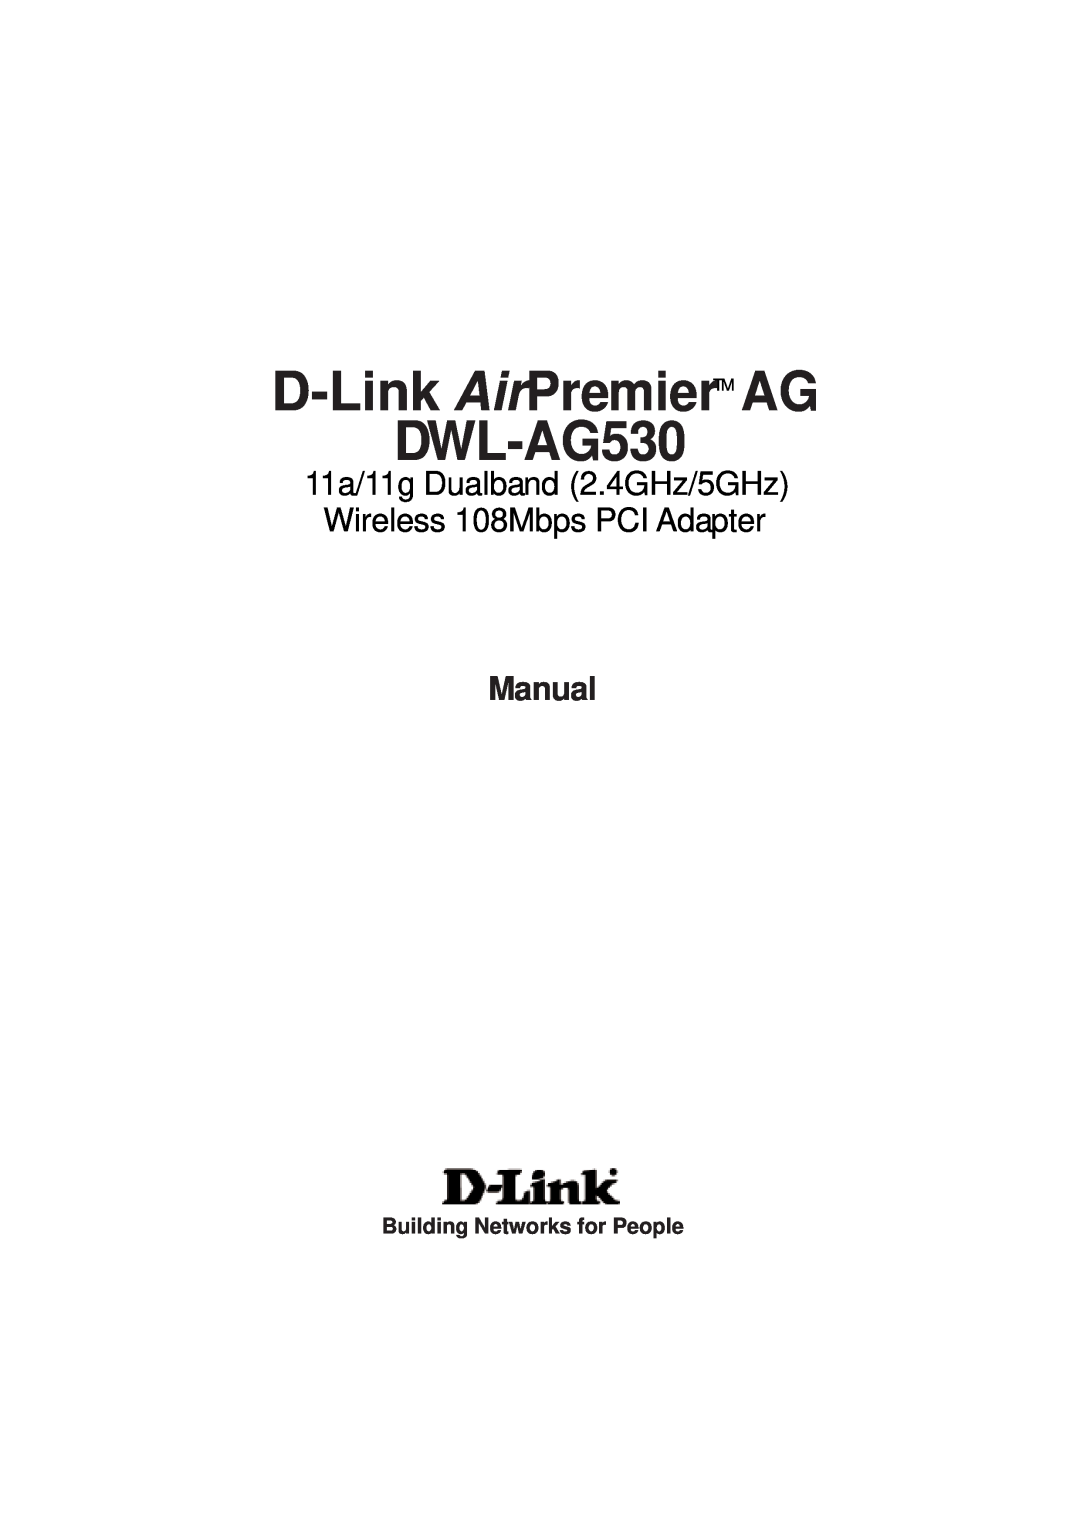 D-Link manual Building Networks for People, D-Link AirPremierTM AG DWL-AG530, Manual 